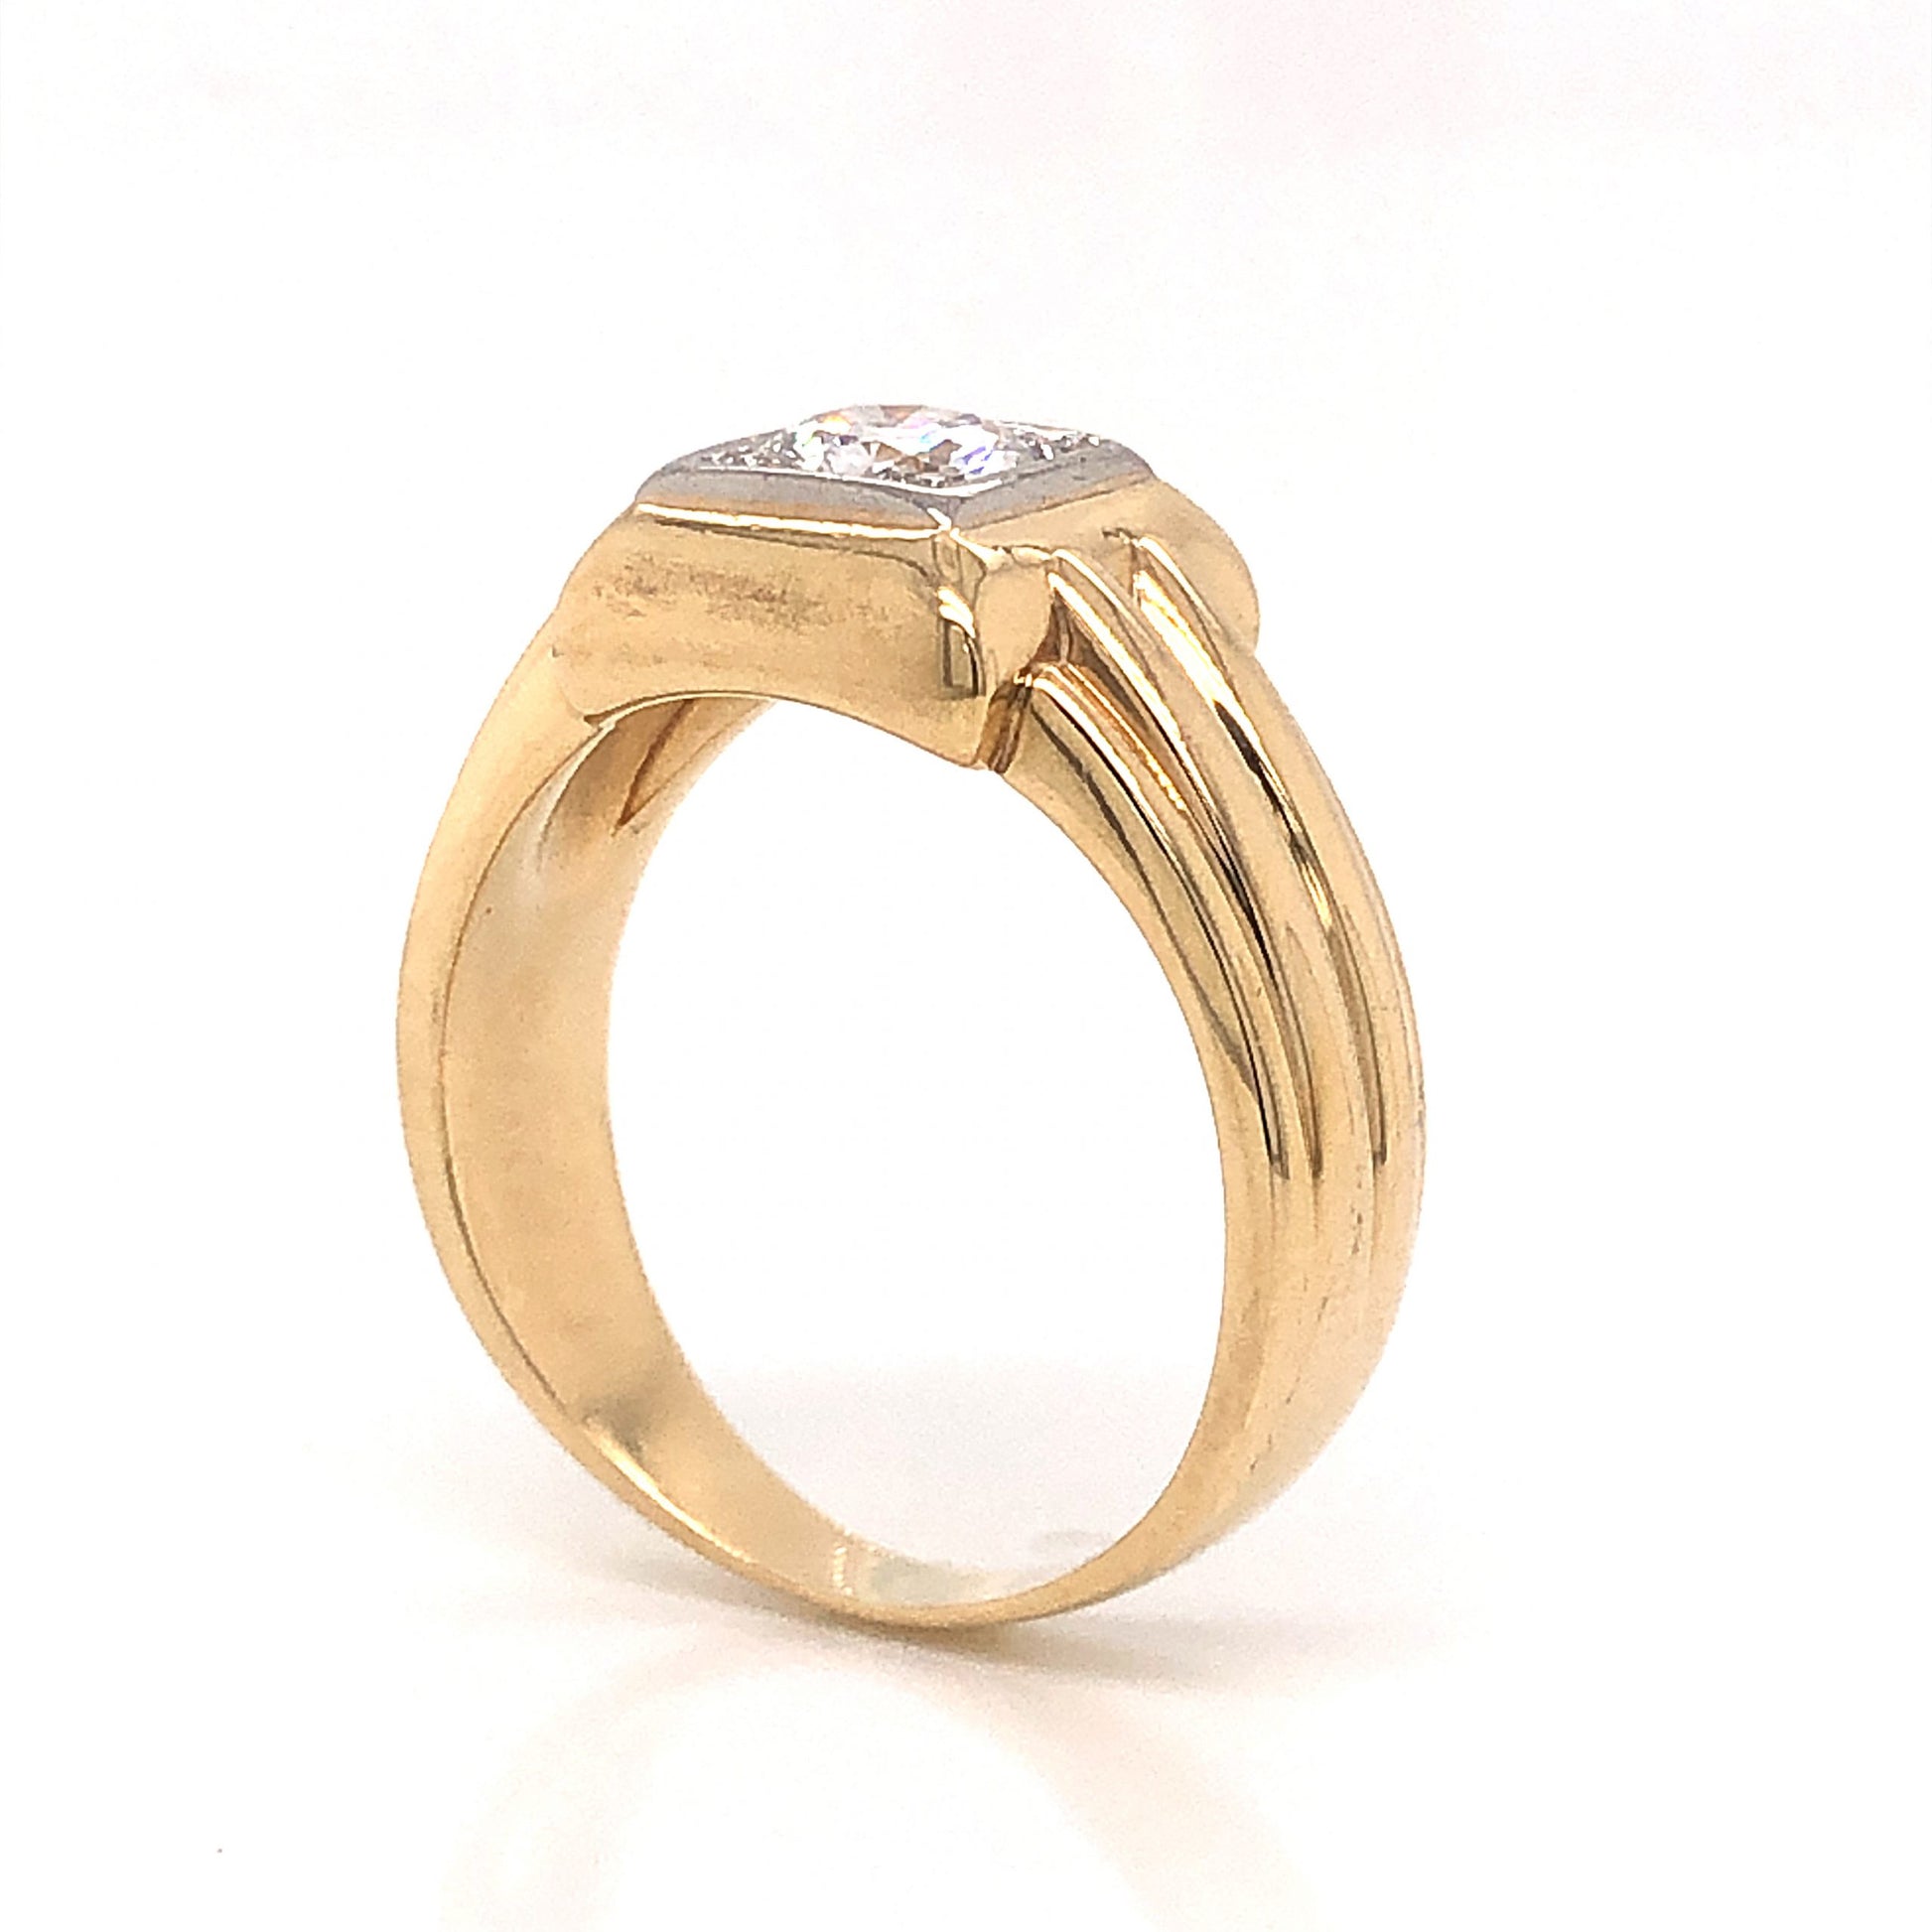 .70 Mid-Century Diamond Engagement Ring in 14k Yellow GoldComposition: 14 Karat White Gold/14 Karat Yellow Gold Ring Size: 8 Total Diamond Weight: .70ct Total Gram Weight: 7.6 g Inscription: 14
      